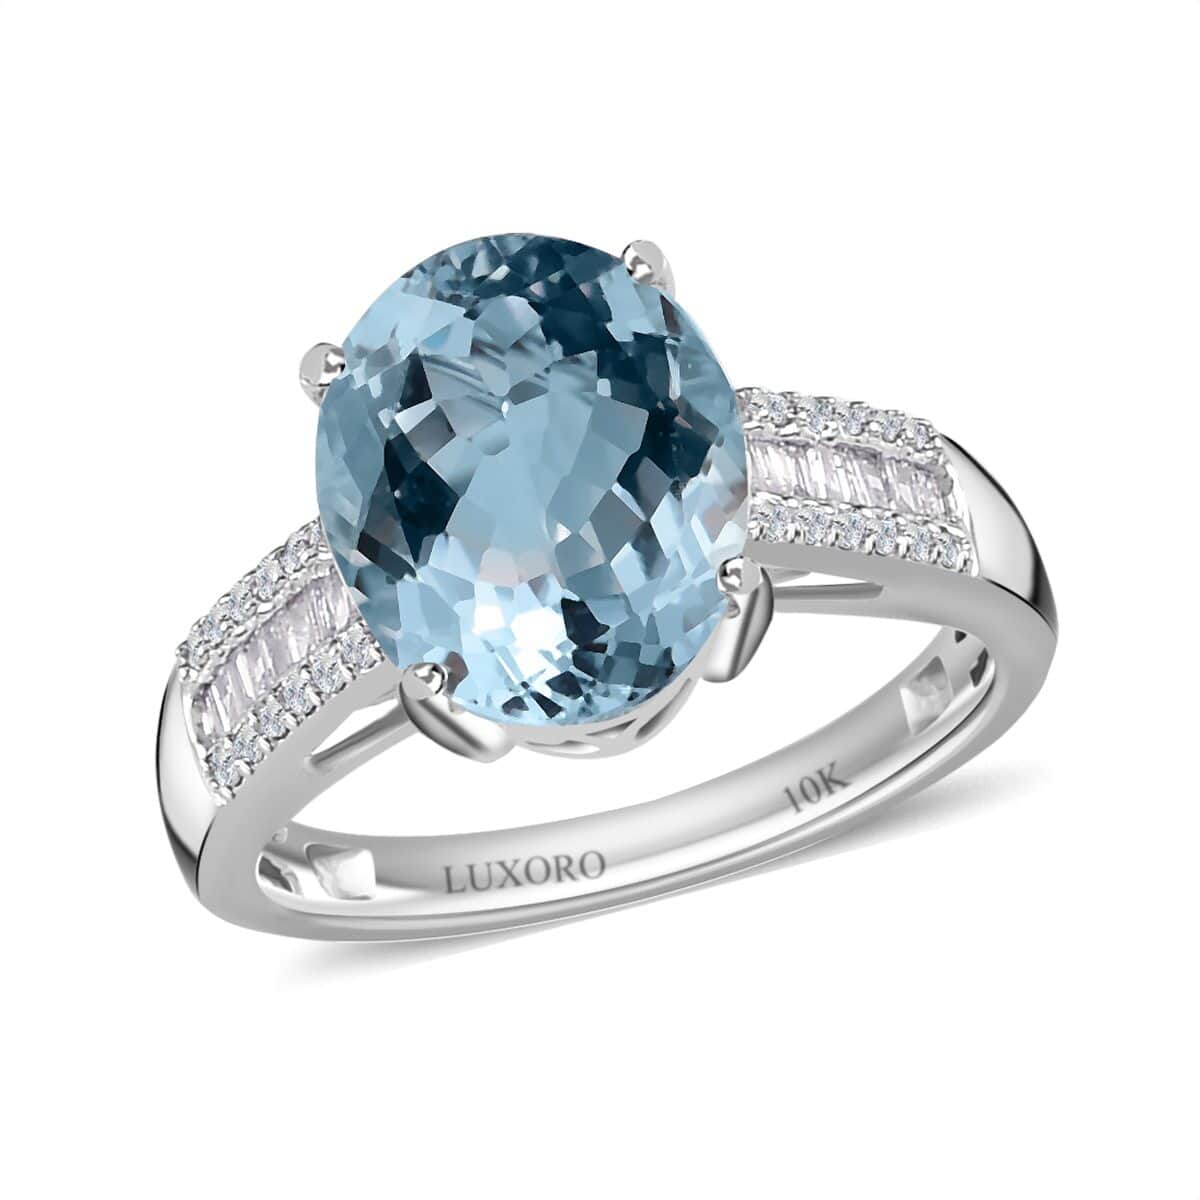 Luxoro 10K White Gold Premium Espirito Santo Aquamarine and Diamond Ring (Size 8.0) 3.40 ctw image number 0